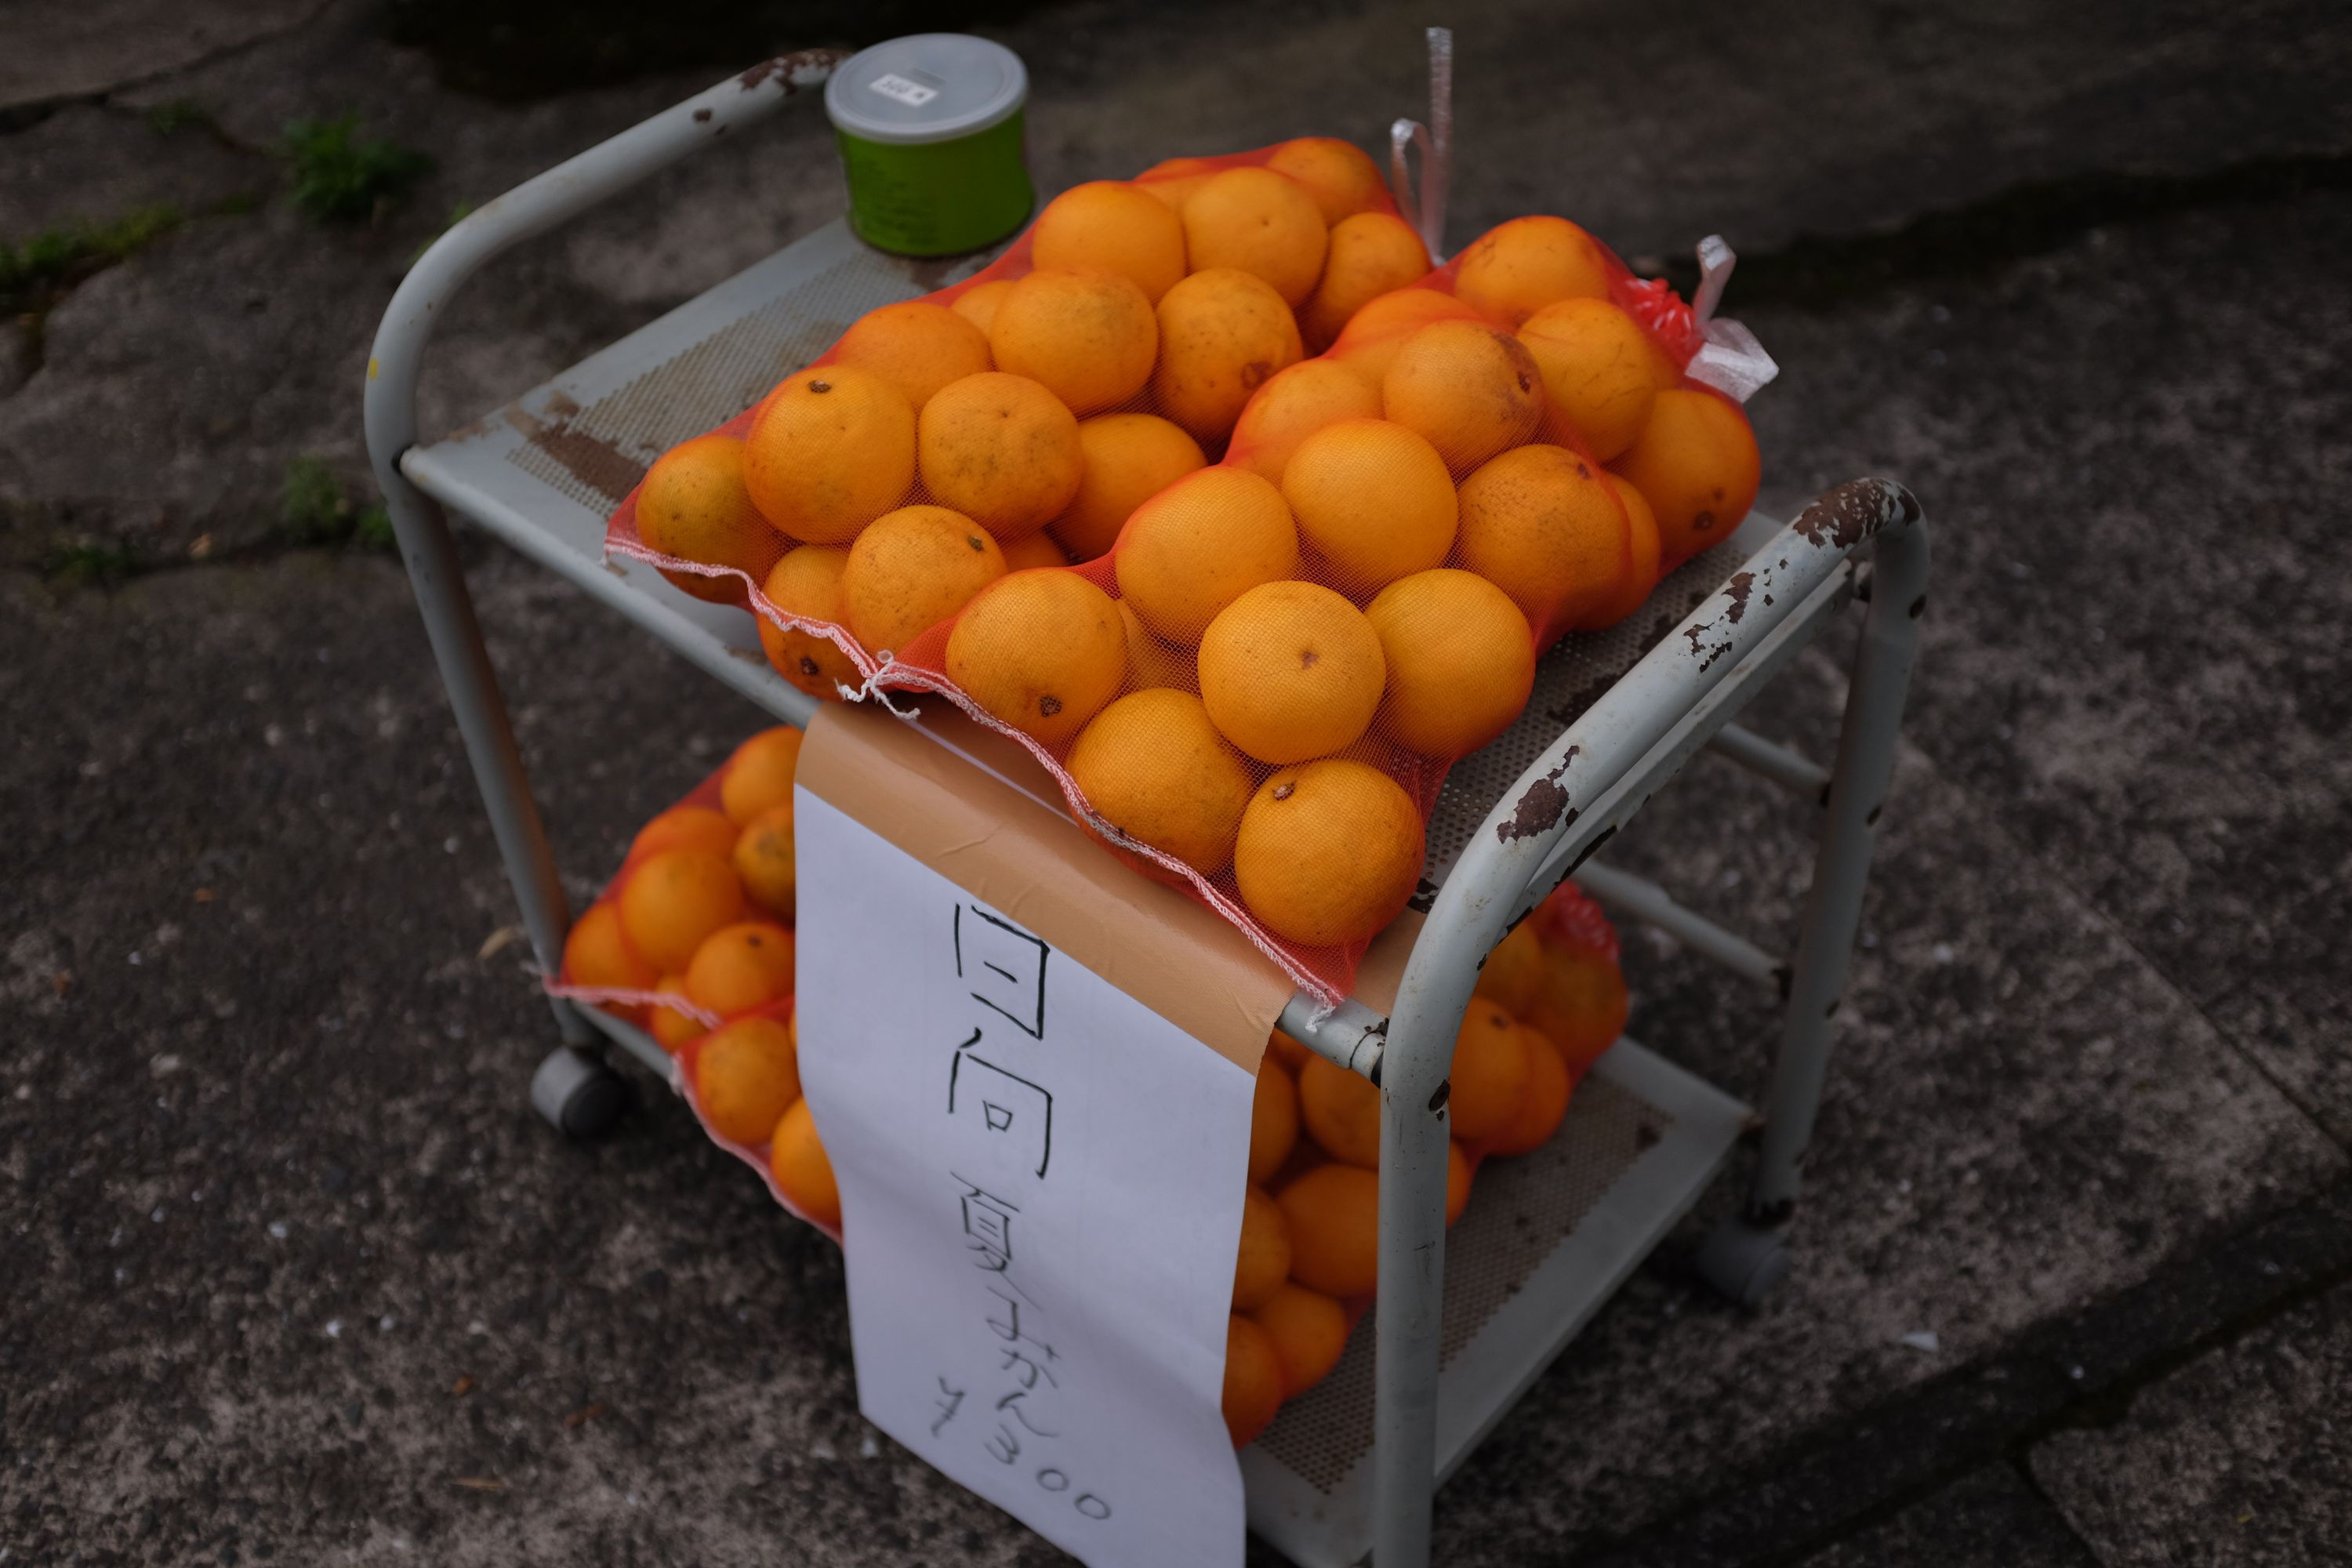 Oranges for sale in Kihoku Ichinari, Kanoya, Kagoshima. Photo: Peter Orosz